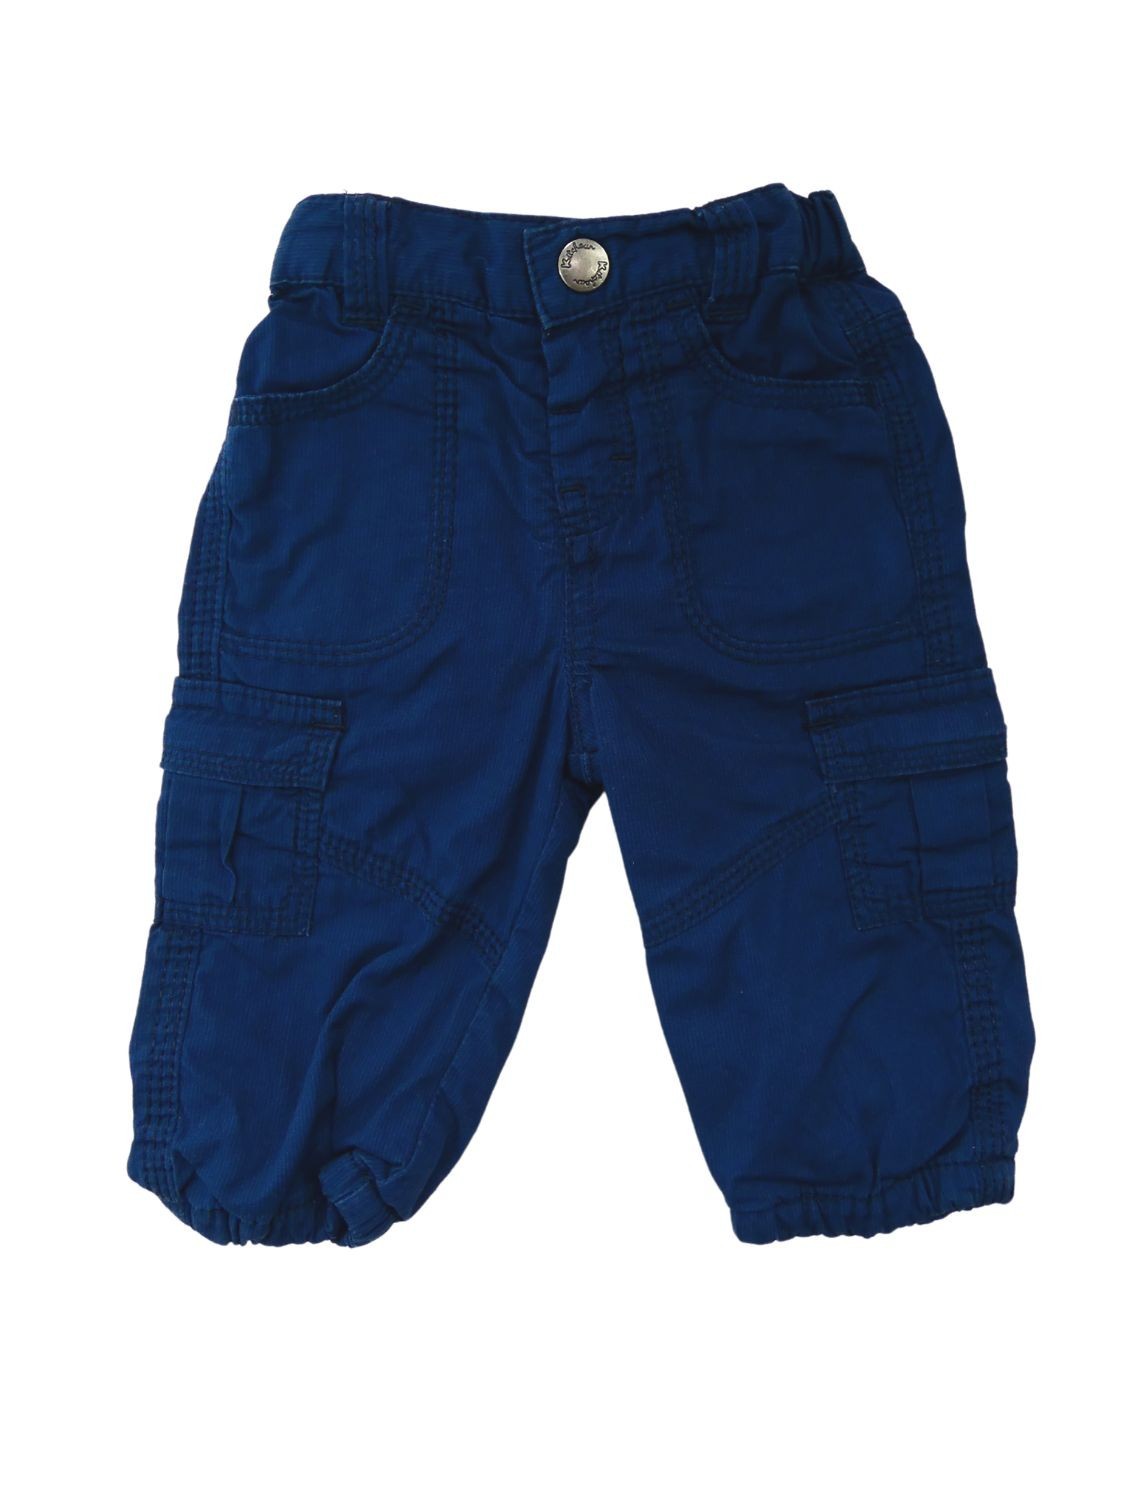 Pantalon bleu marine multipoches KITCHOUN taille 3 mois